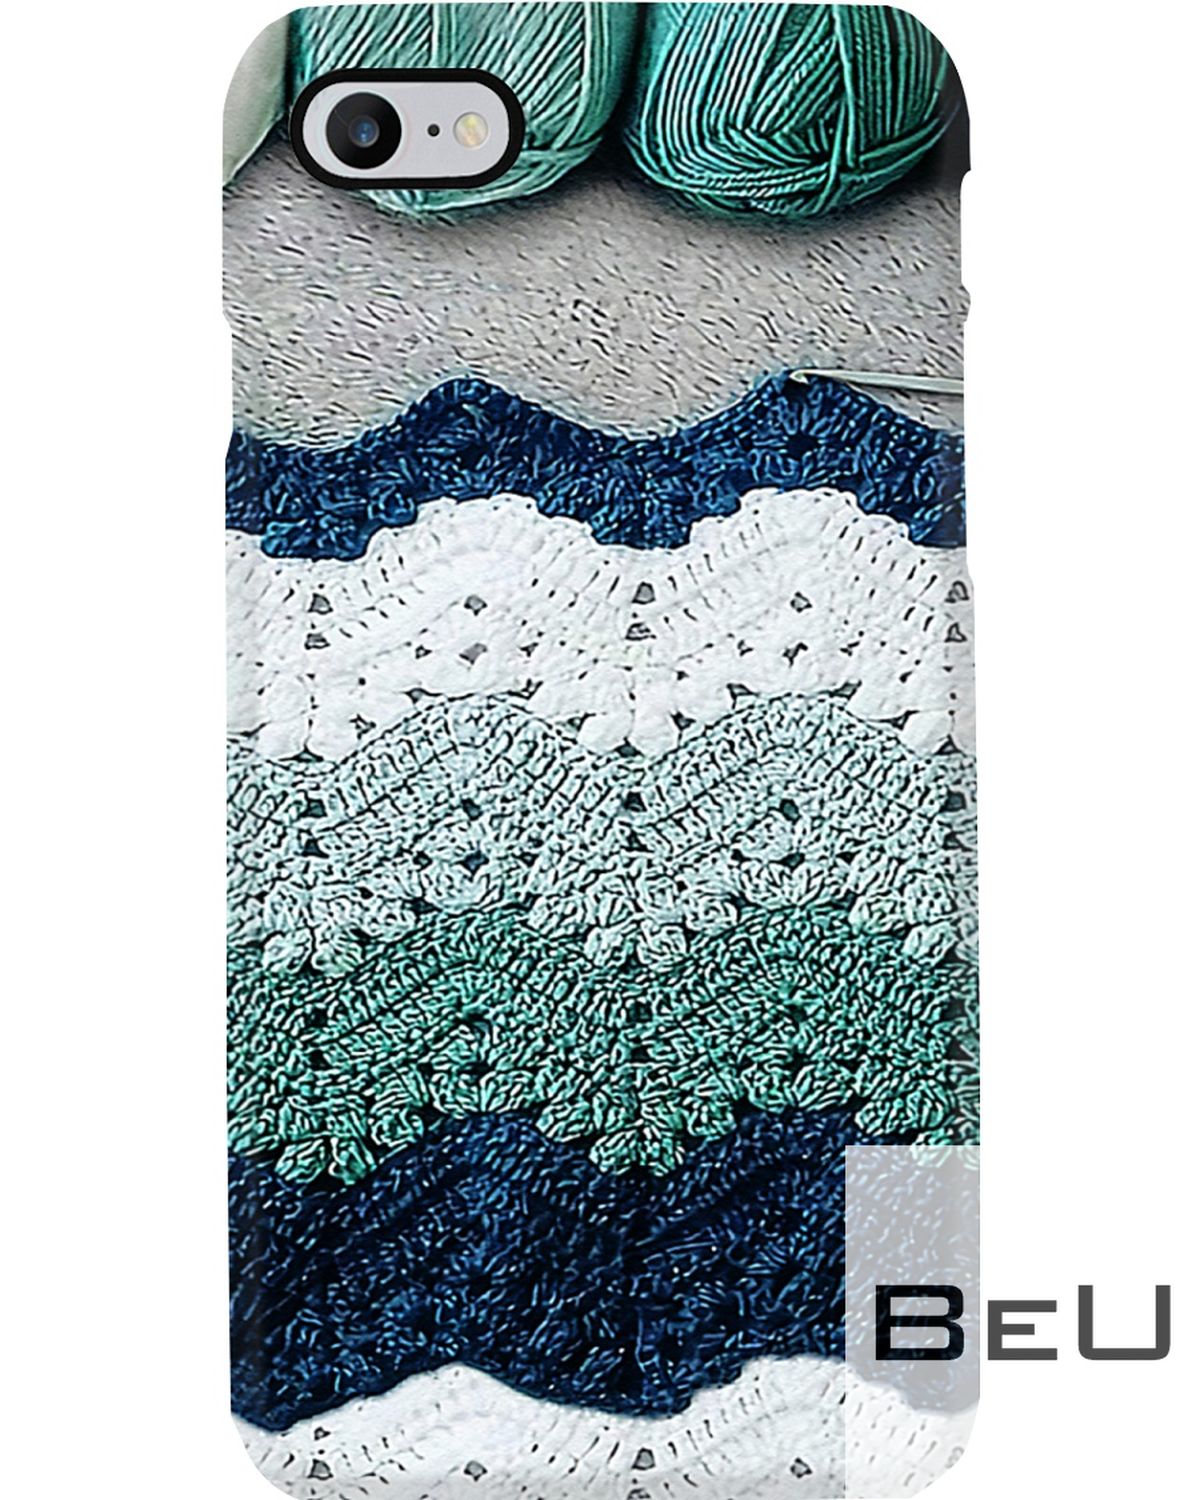 Crochet And Knitting Yarn Phone Case